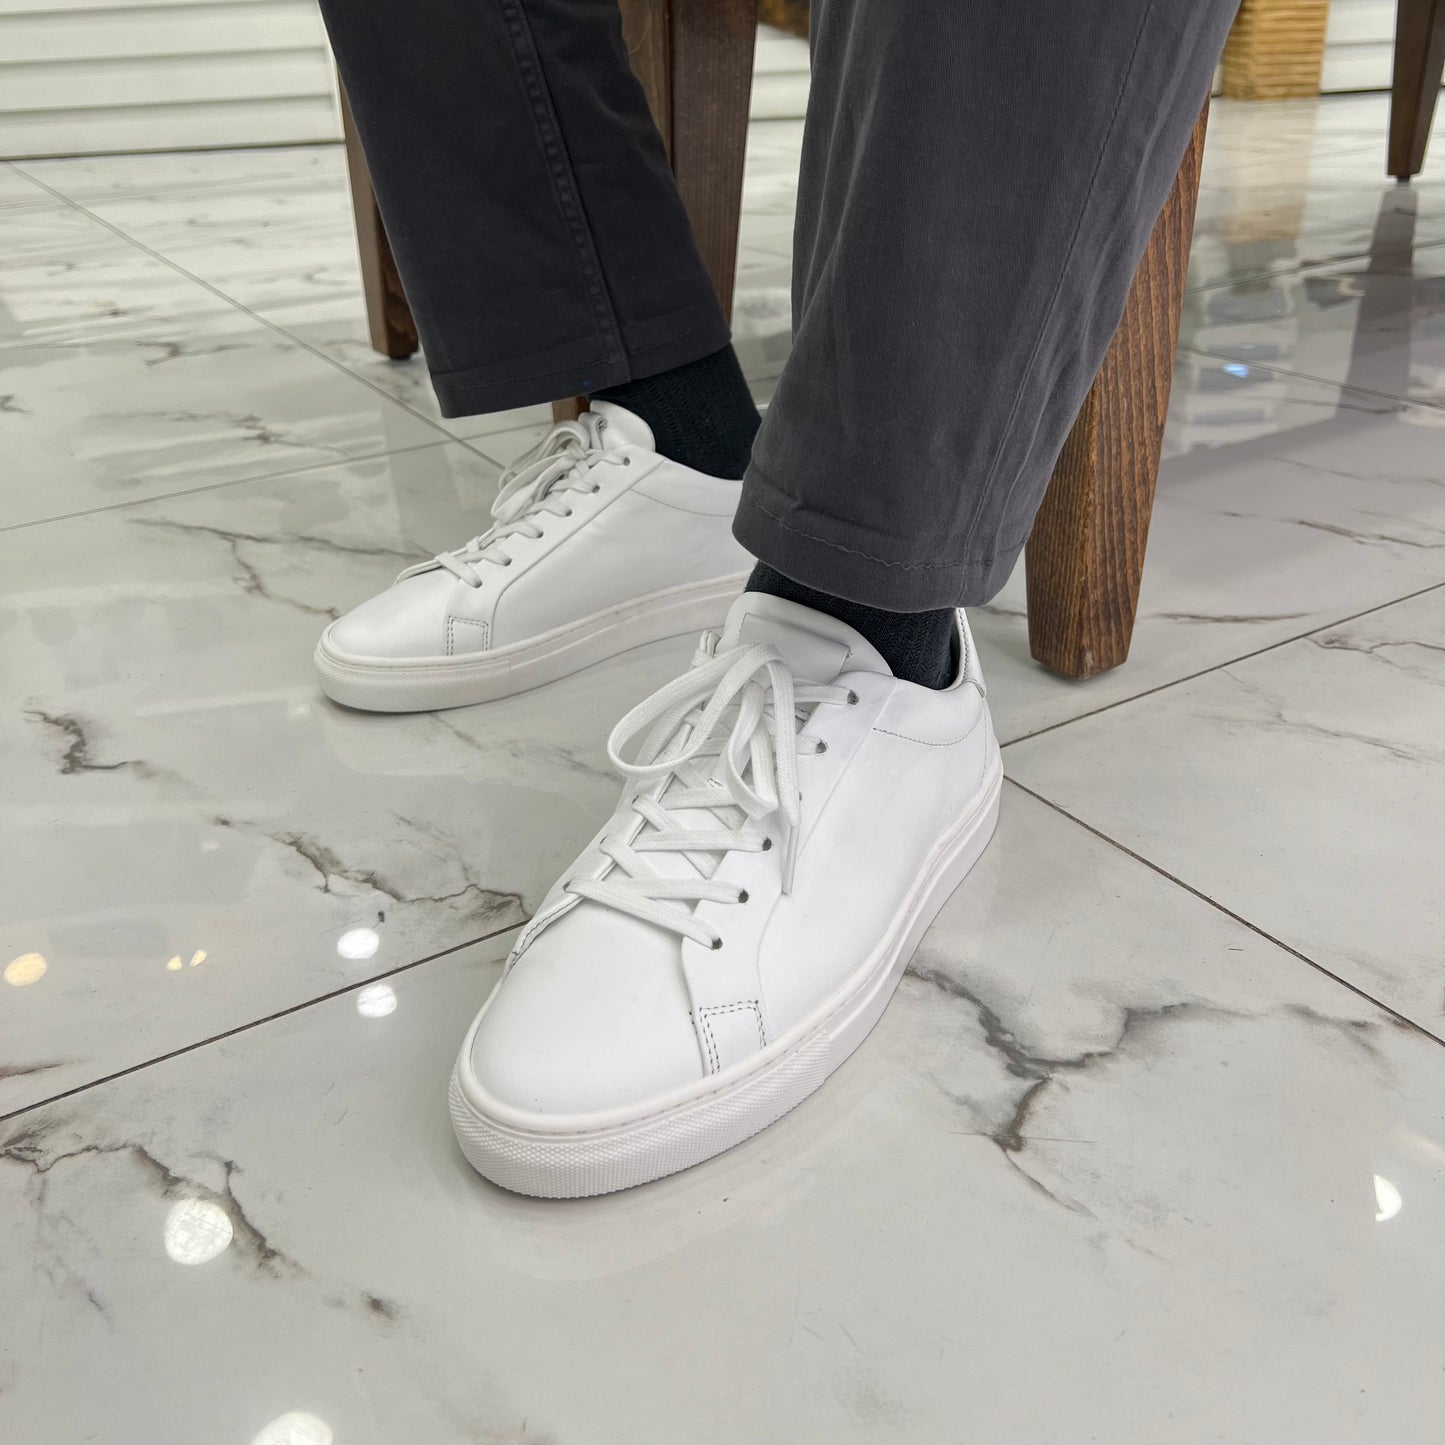 Kebo Italian classic sneakers for men in white